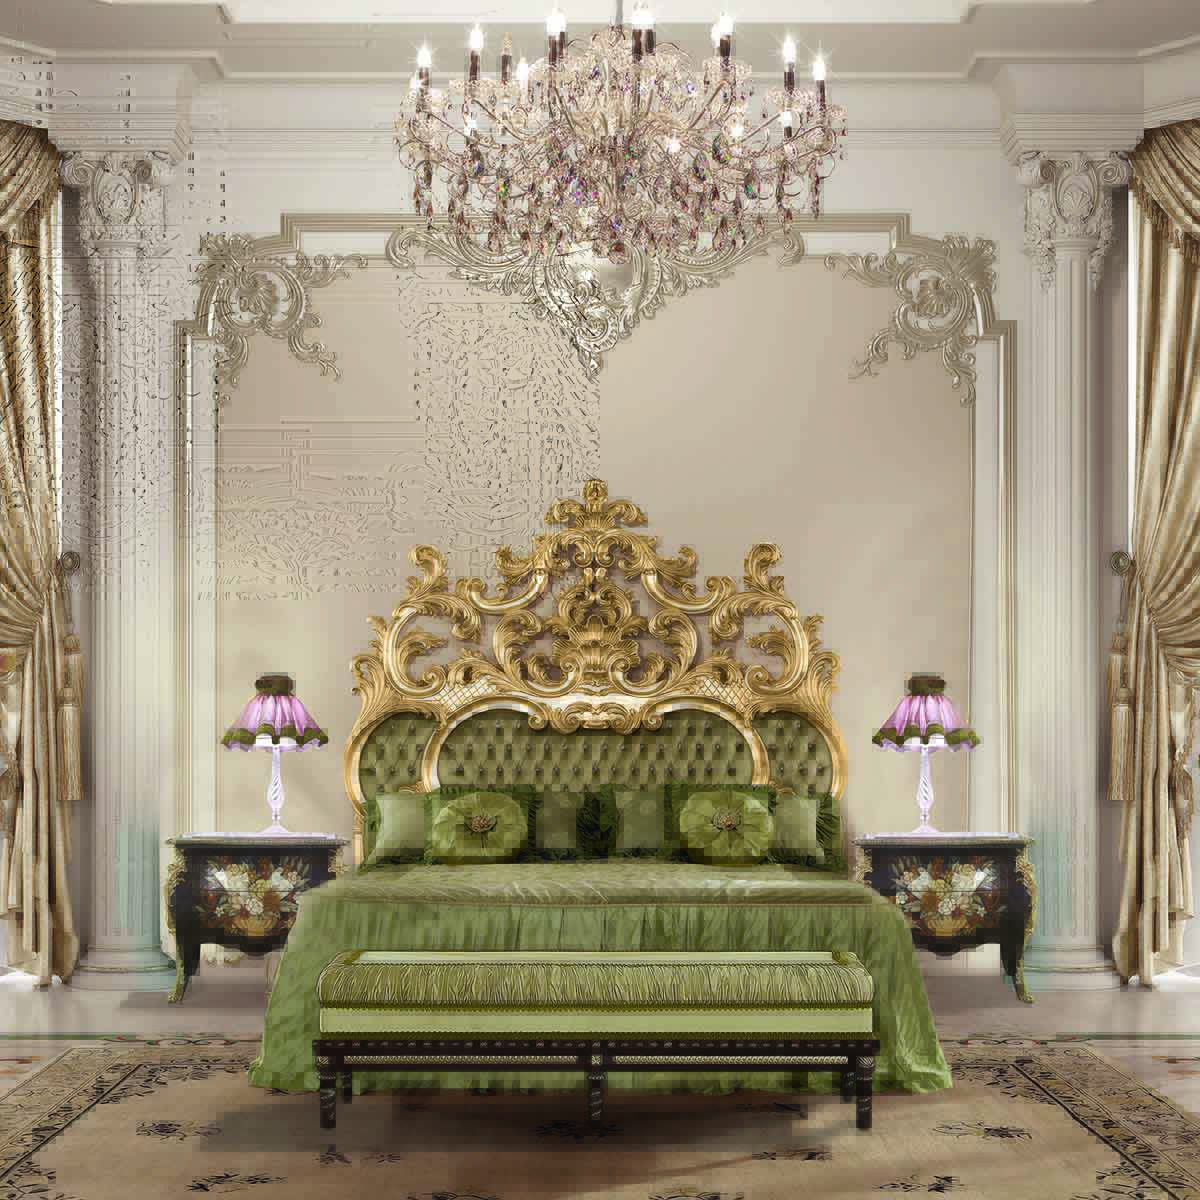 Italian style bedroom furniture